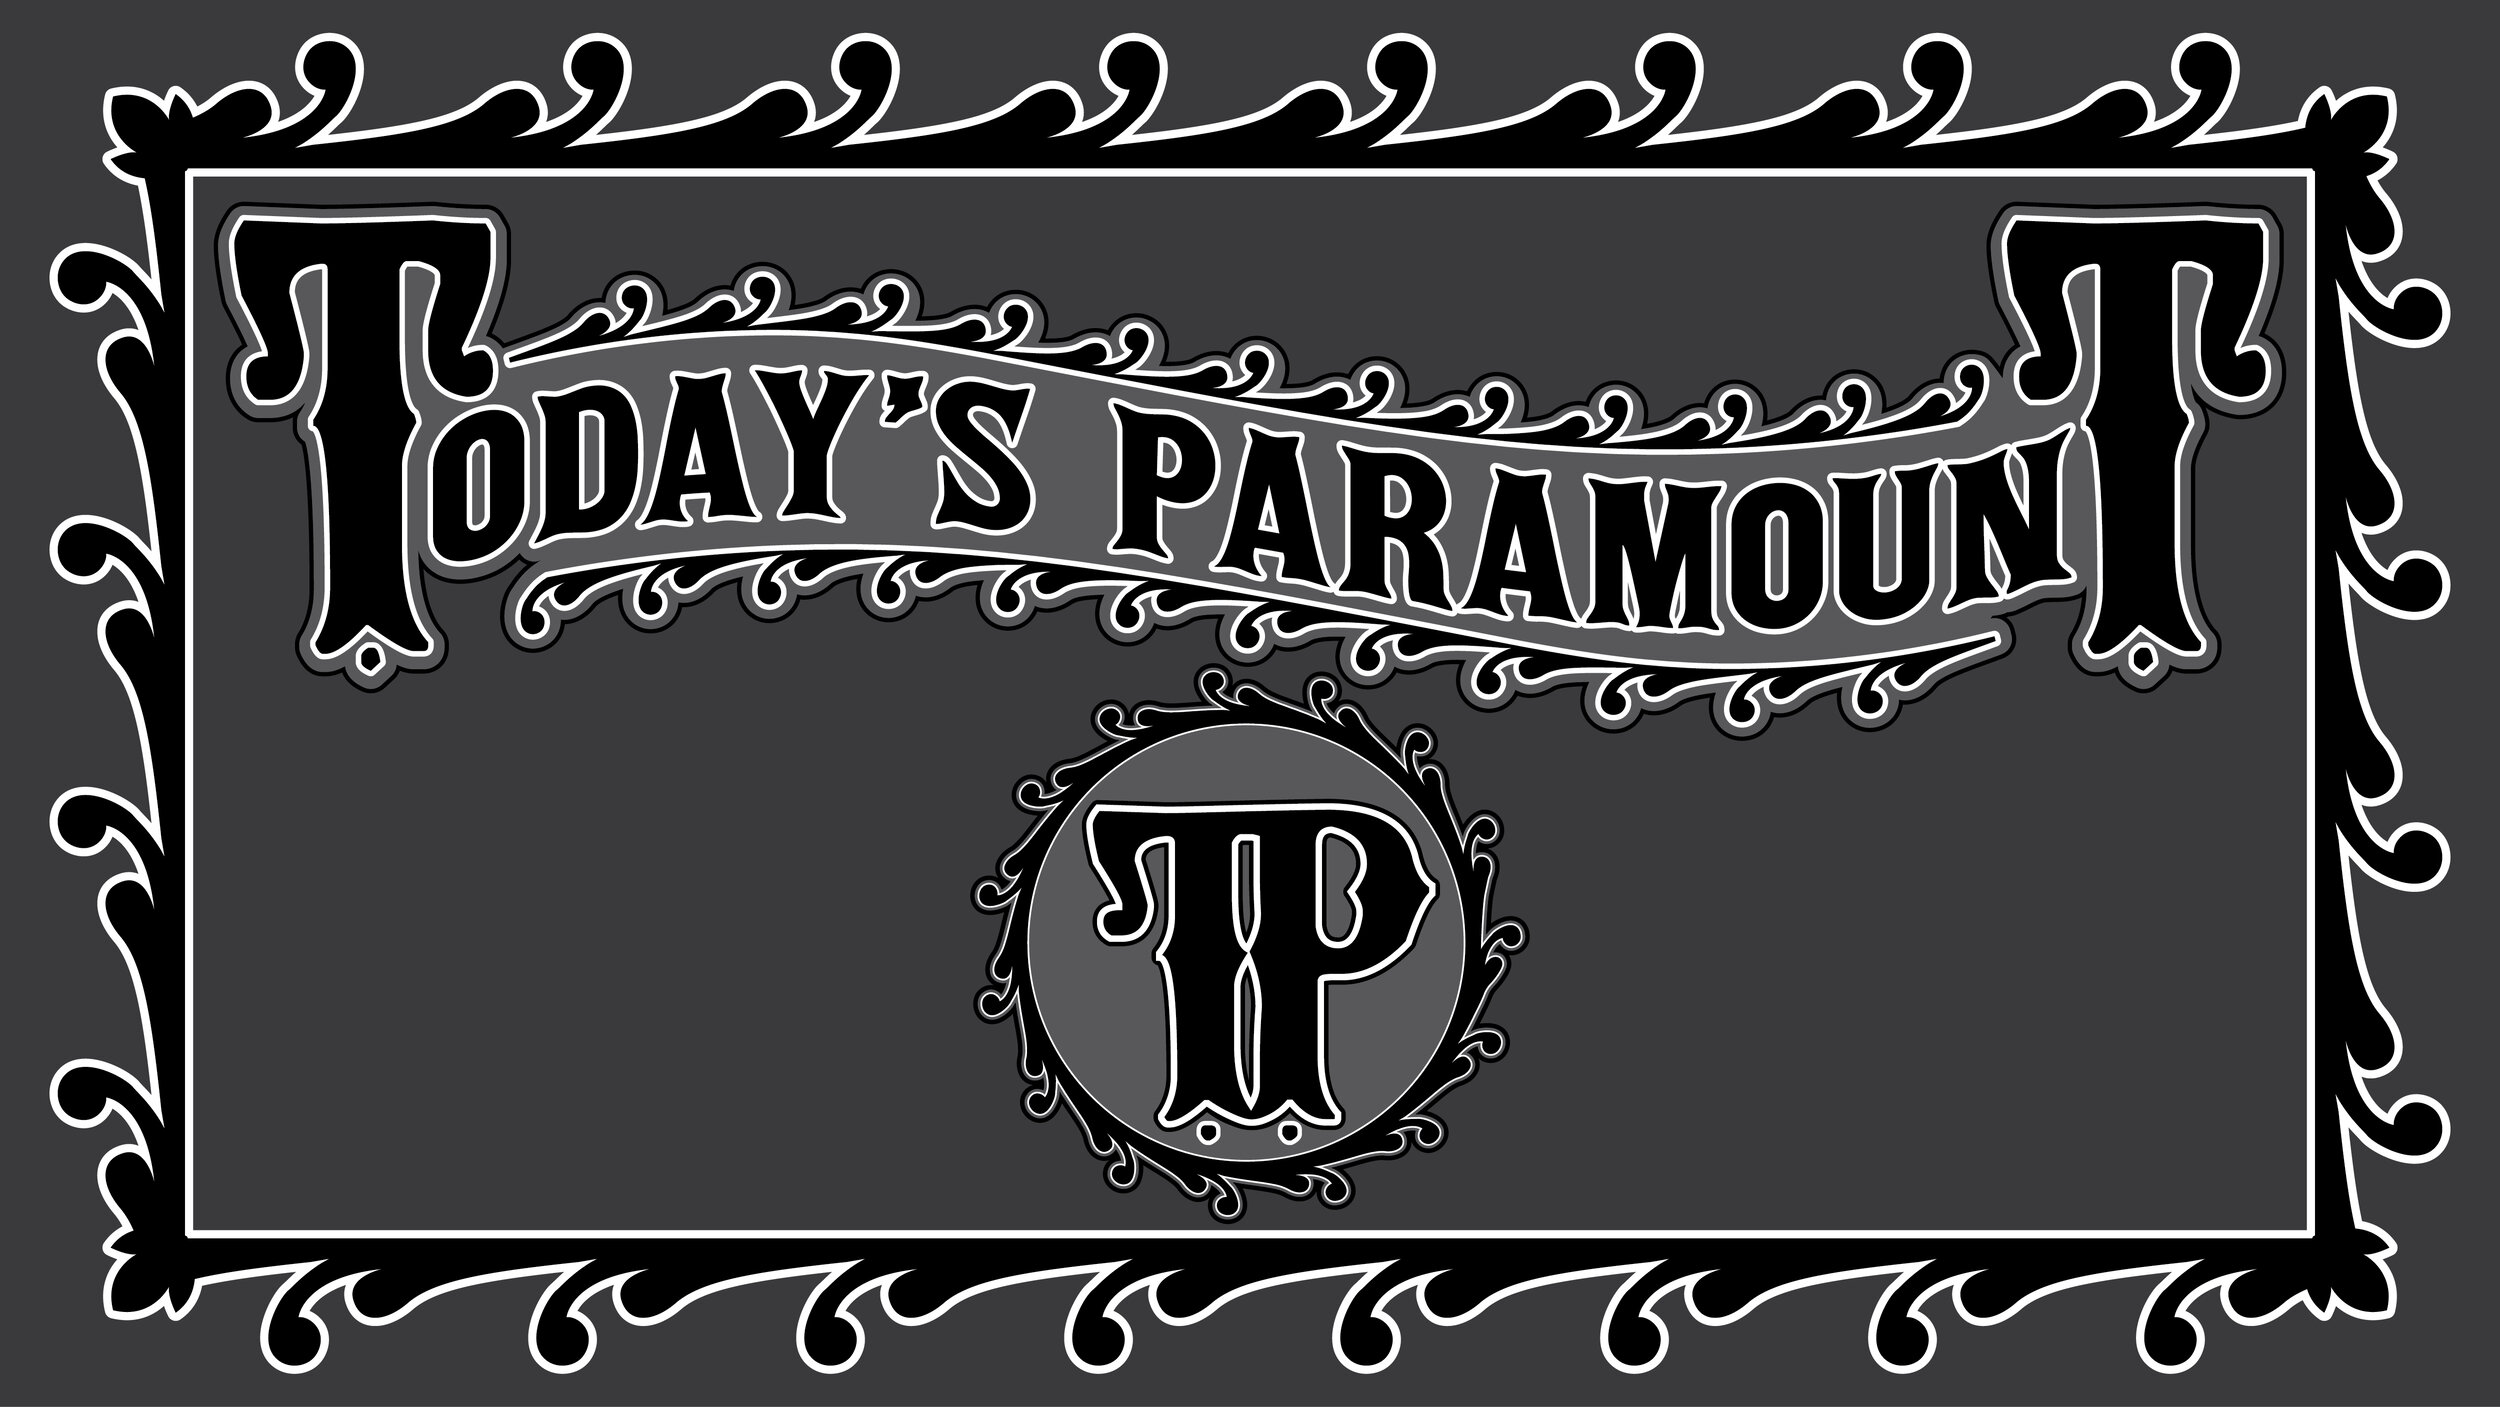 Today's Paramount